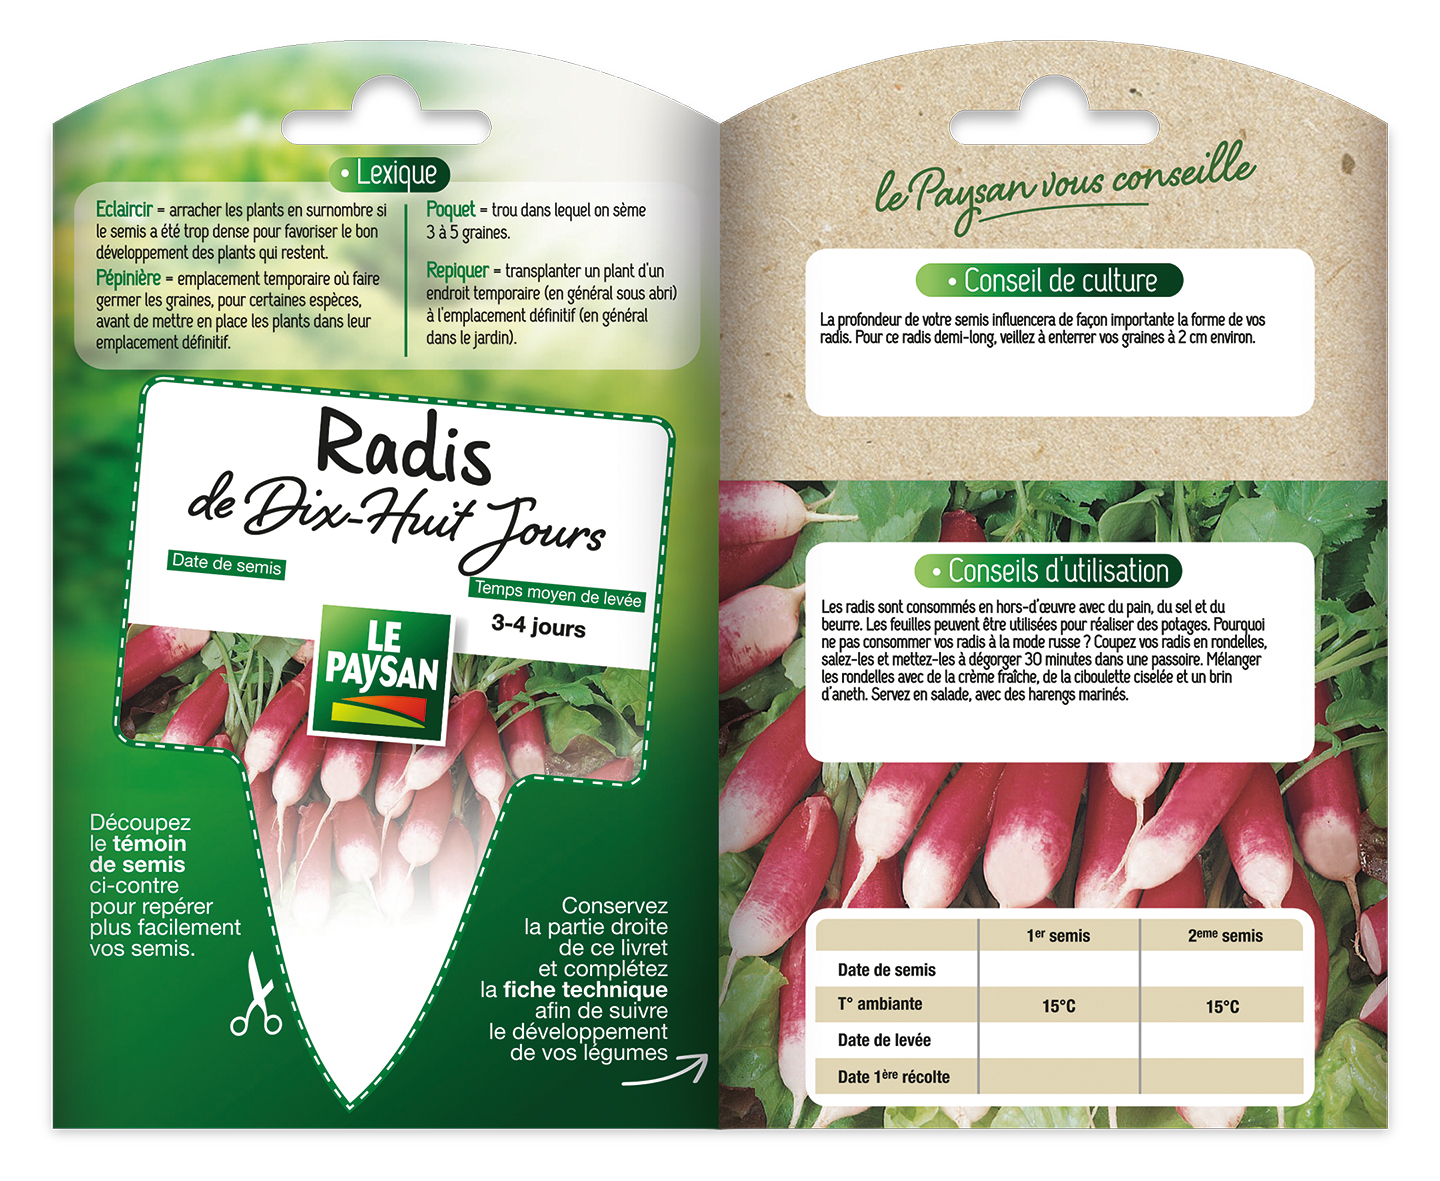 RADIS de 18 jours - Les graines Bio Jaime-jardiner.com